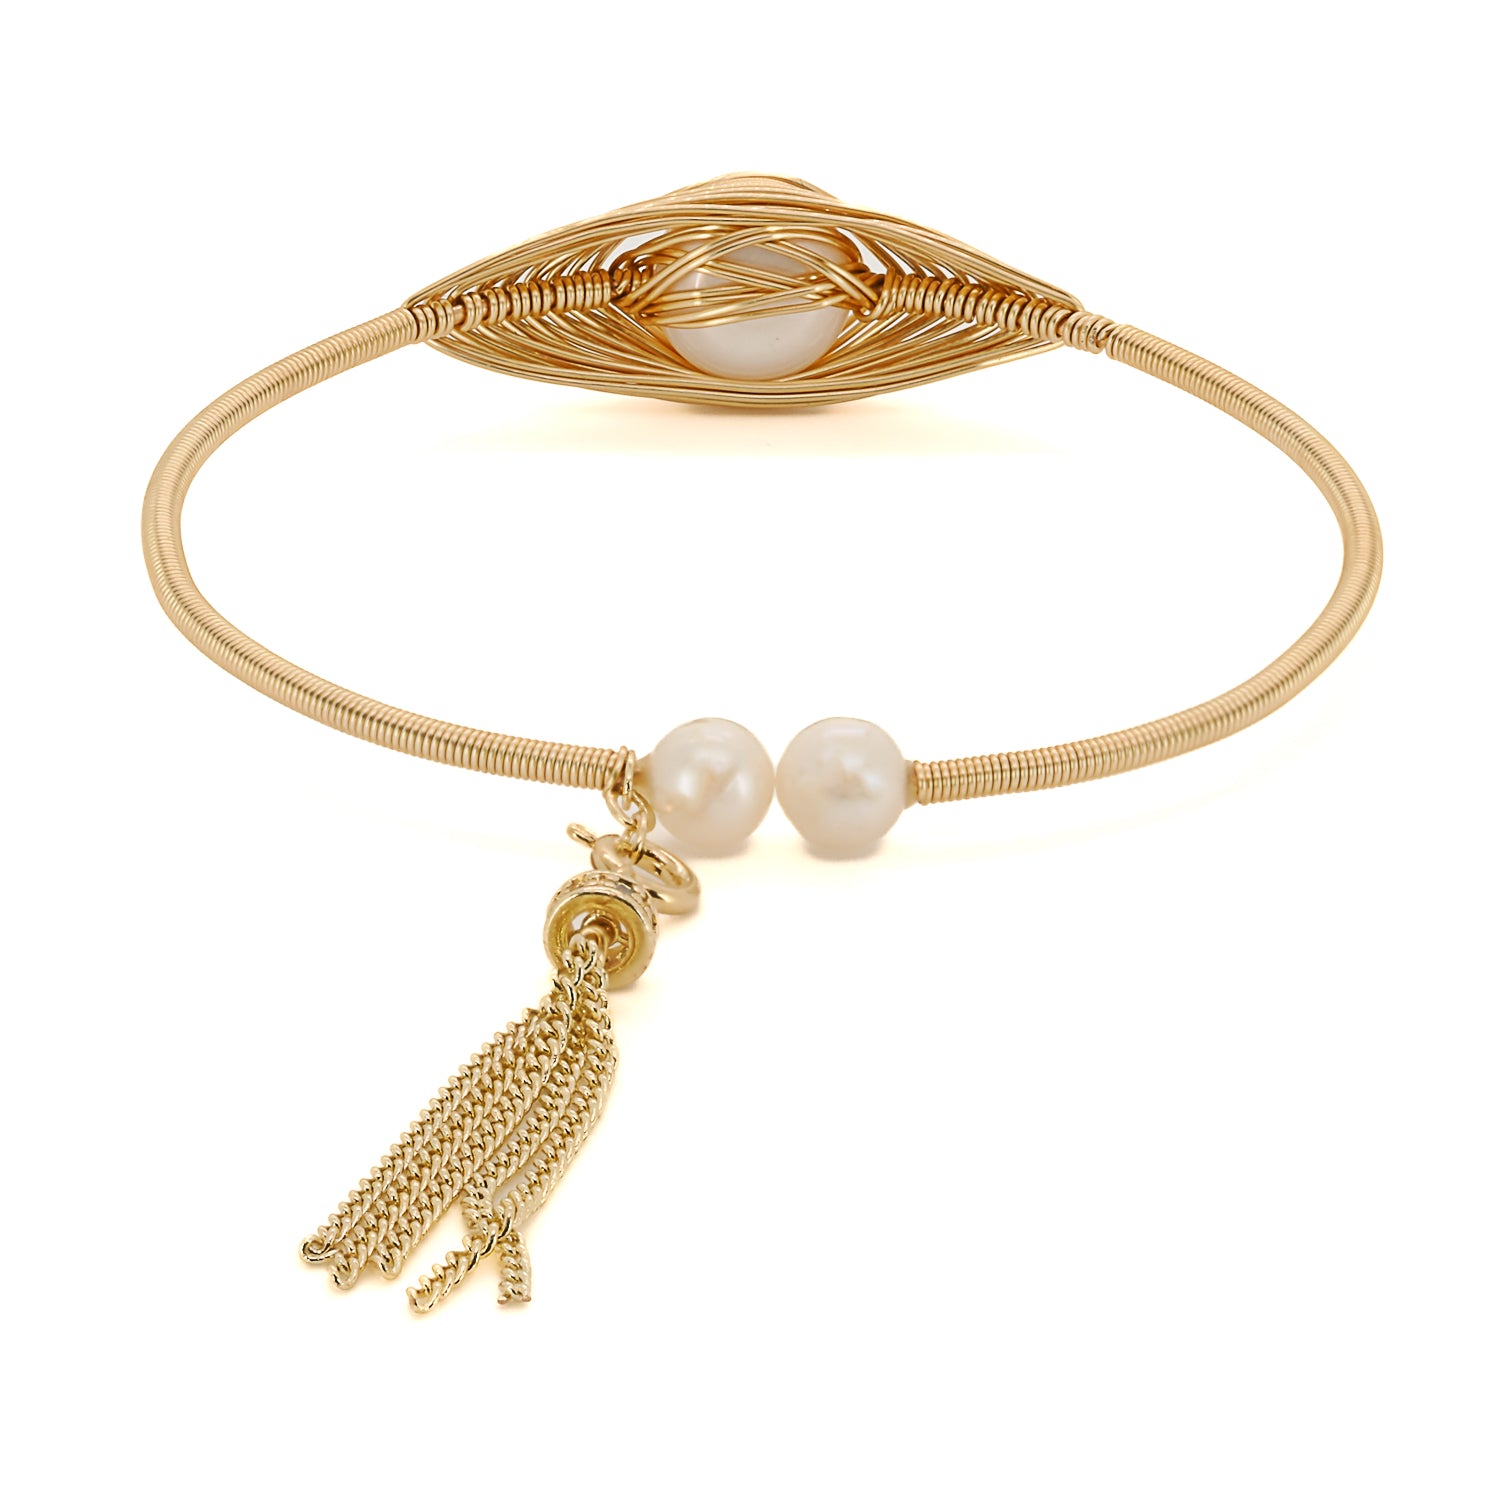 Captivating centerpiece: gold and pearl bangle bracelet exudes opulence.